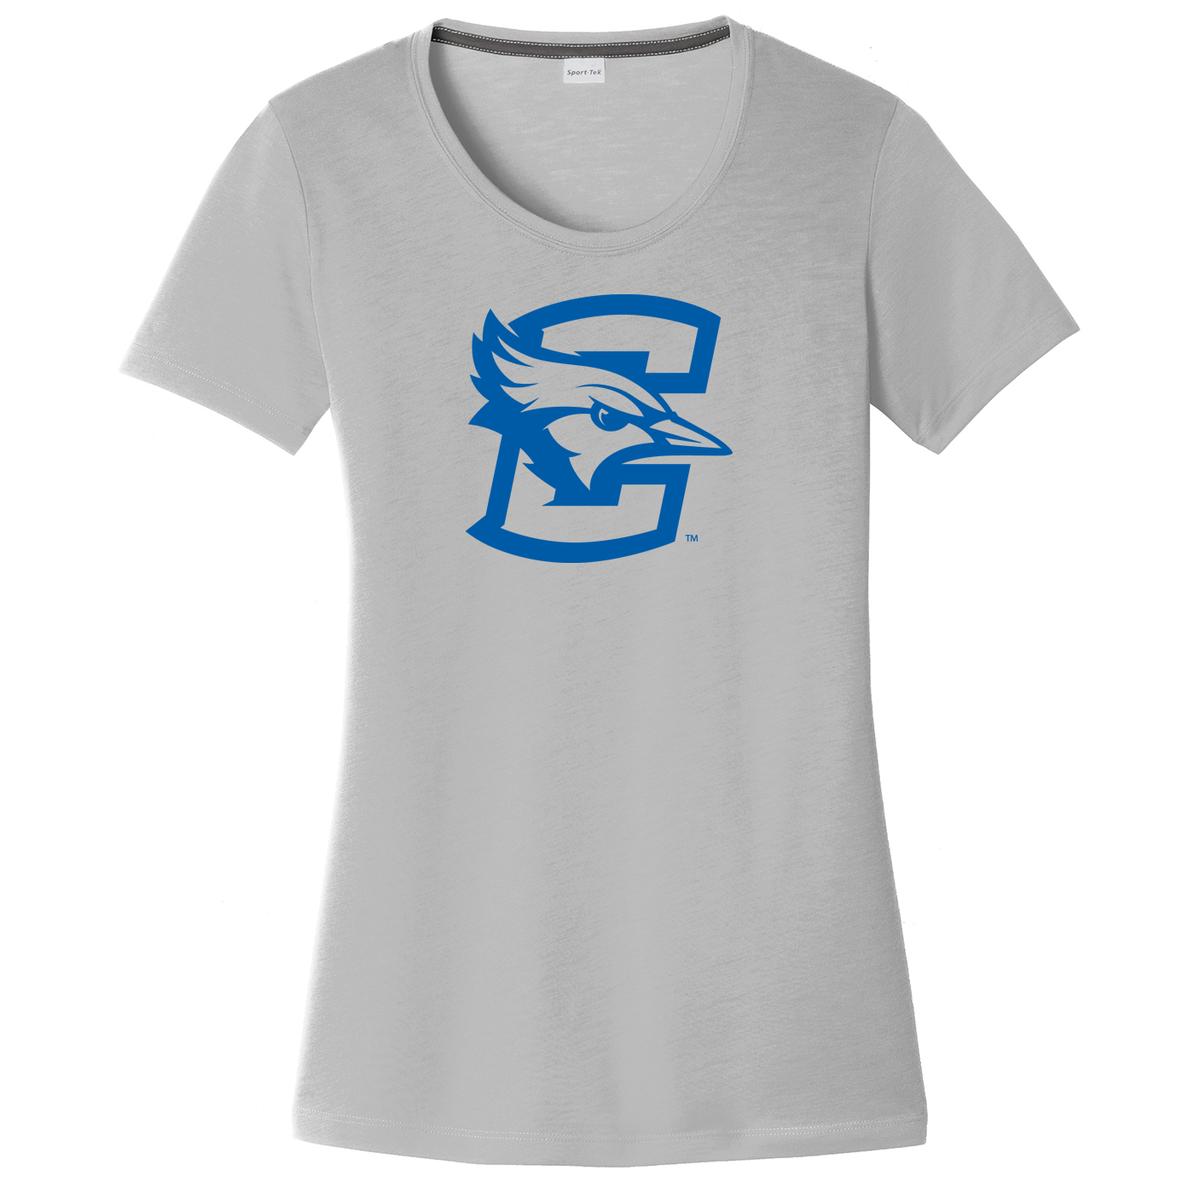 Creighton University Lacrosse Women's CottonTouch Performance T-Shirt